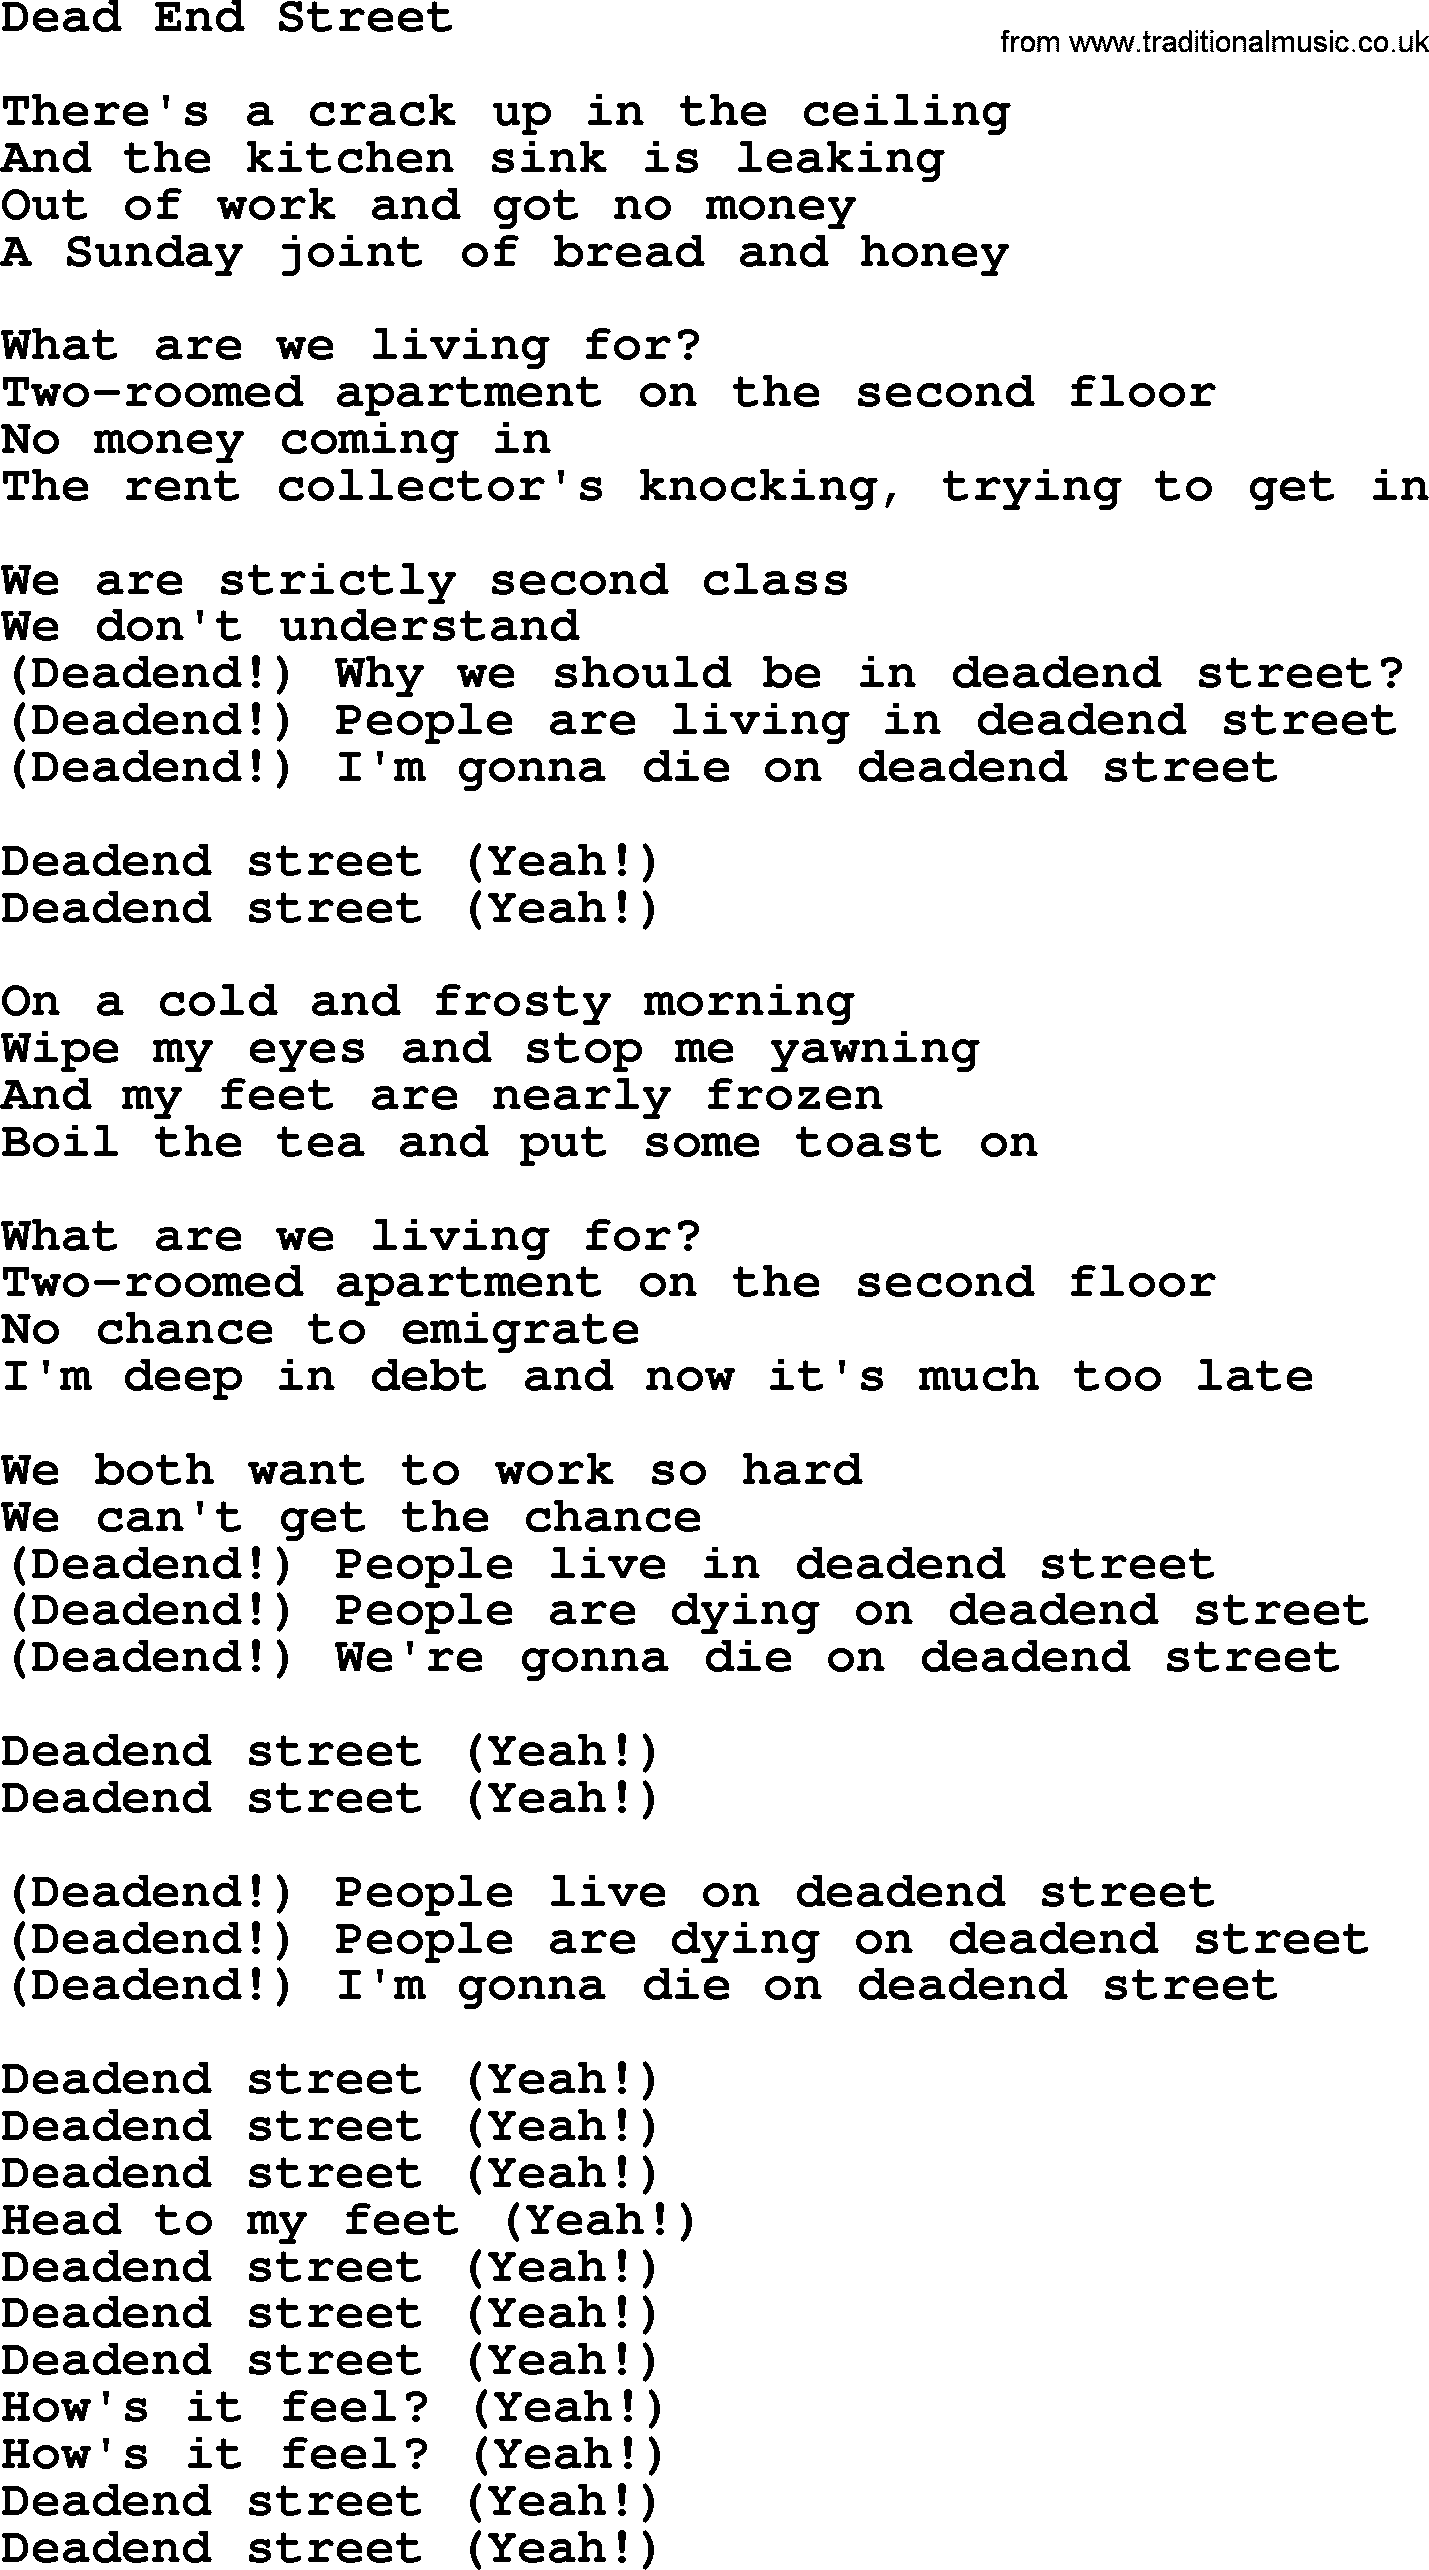 The Byrds song Dead End Street, lyrics